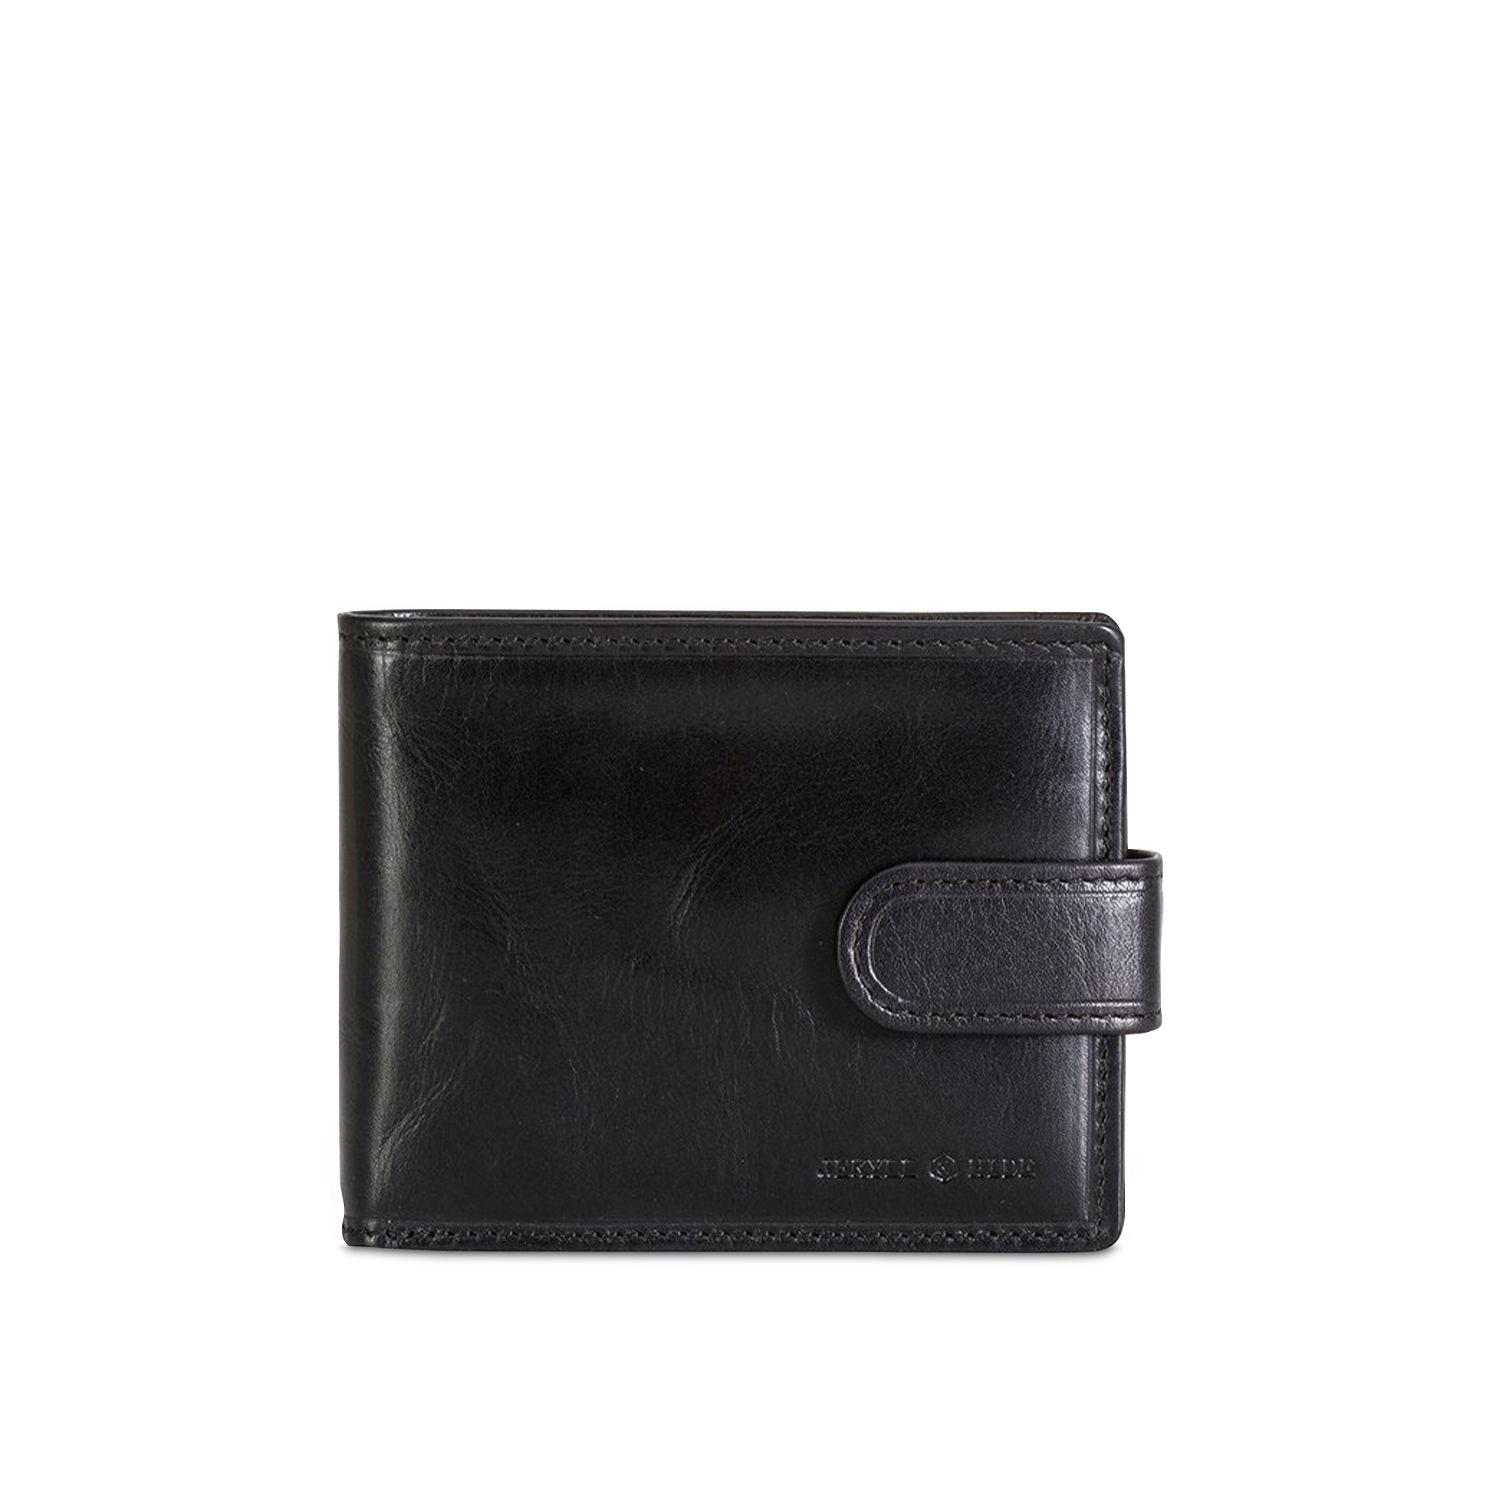 2791oxblg oxford leather wallet– black